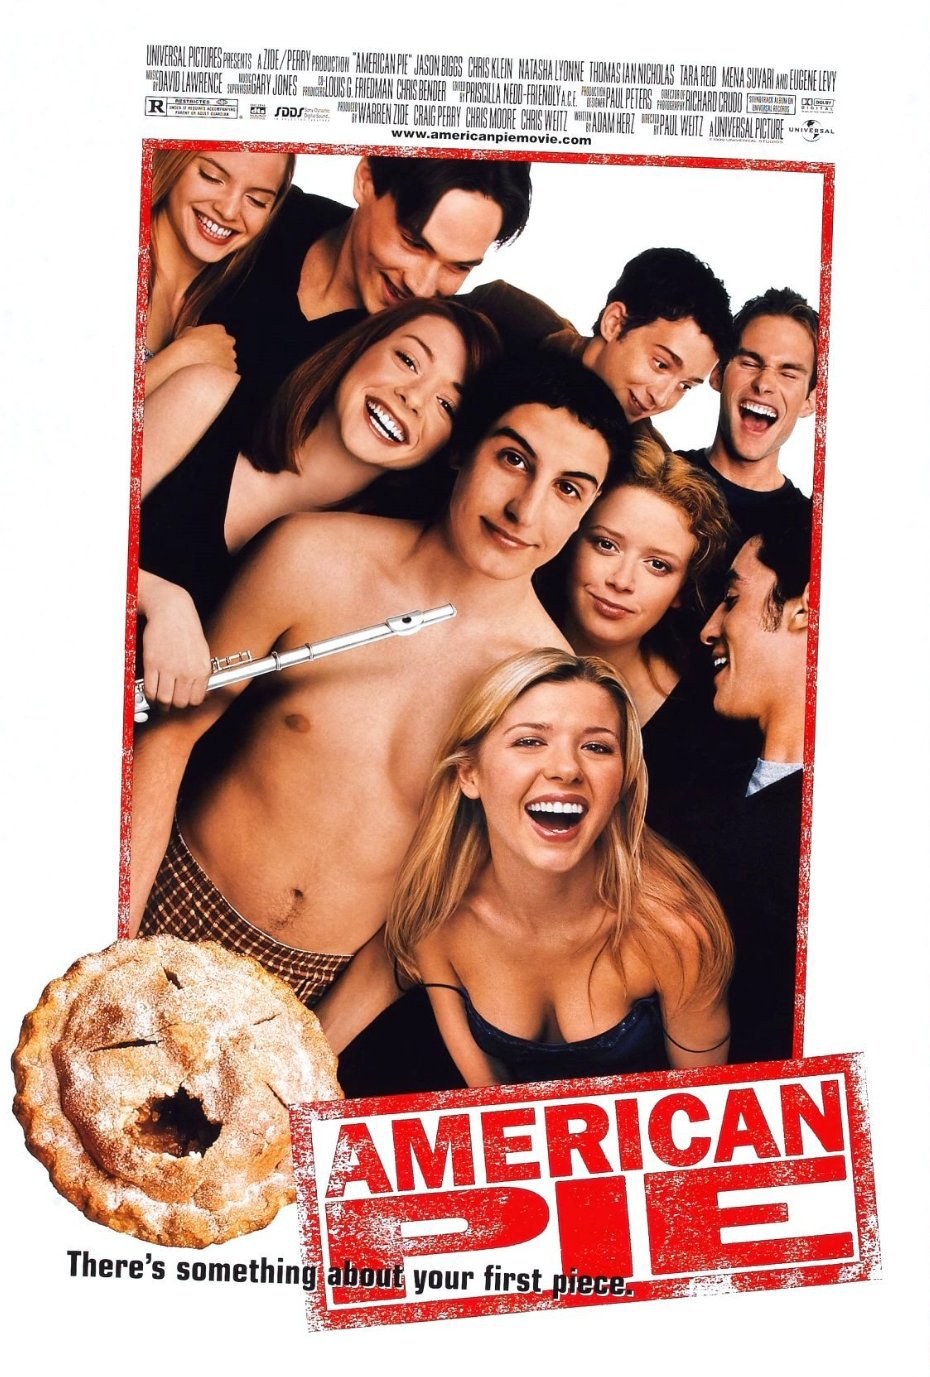 bev peters recommends American Pie Dirty Scenes